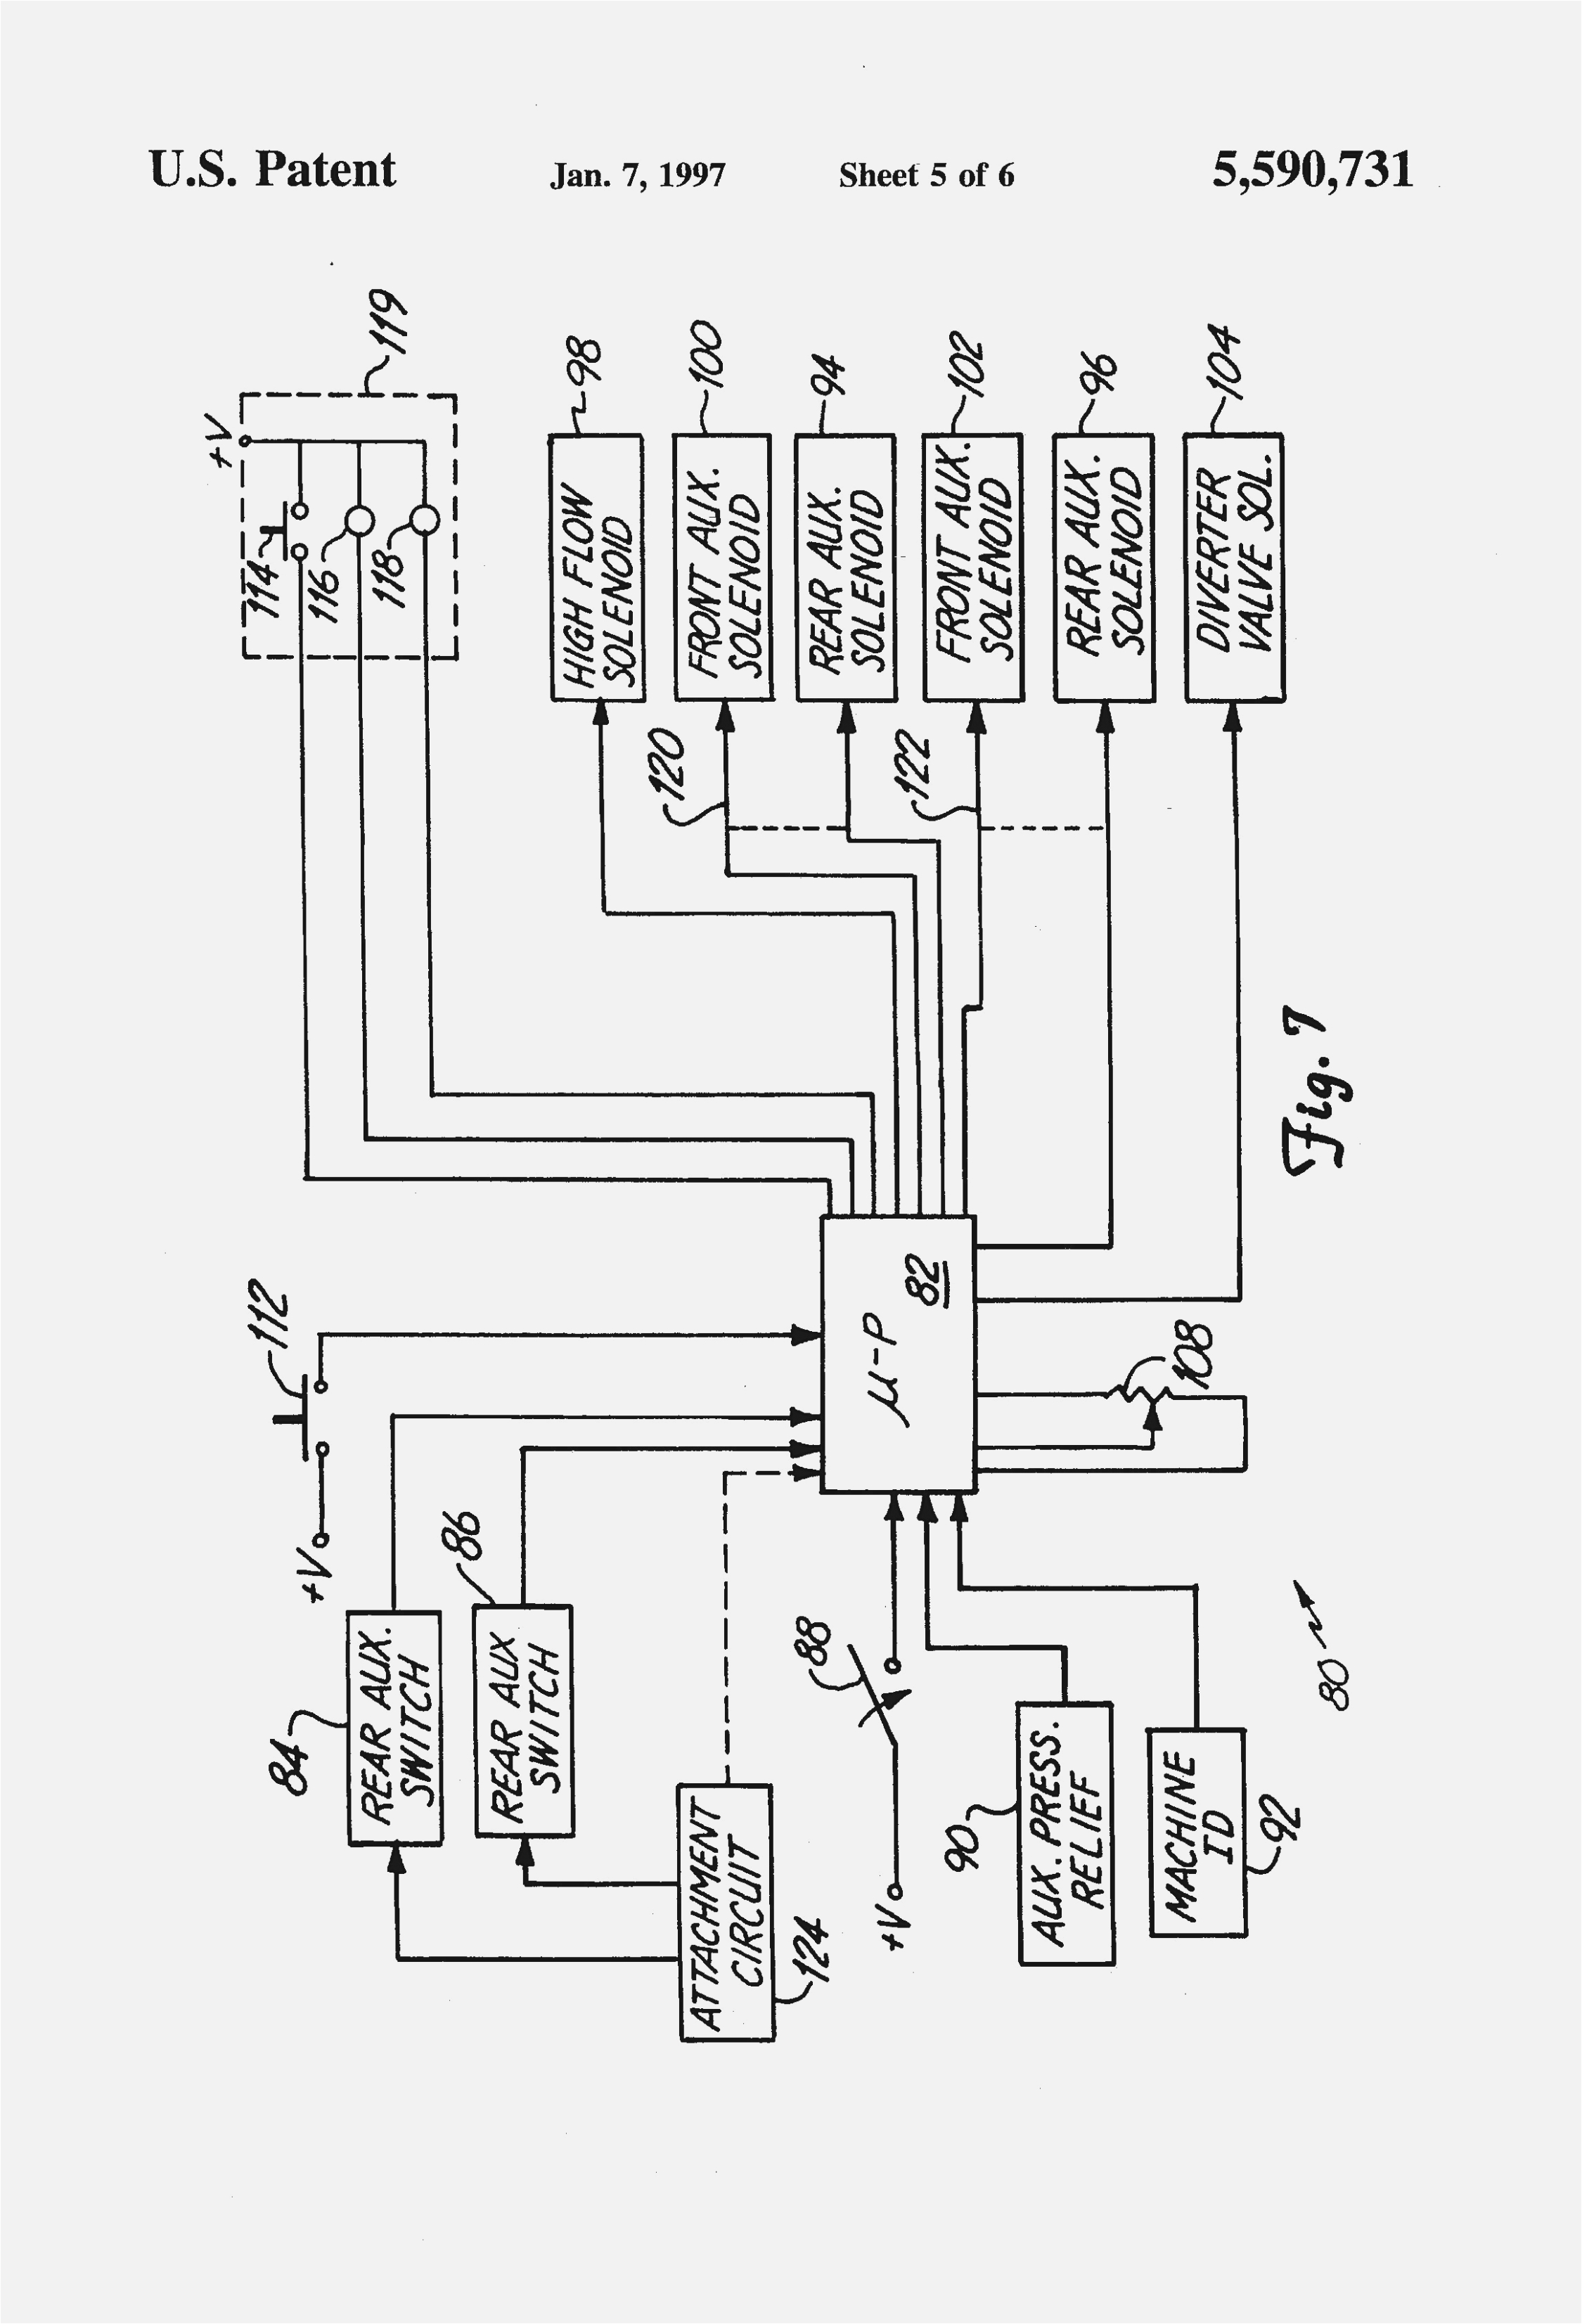 Smc Valve Wiring Diagrams Diagram Smc Wiring Dh7b Wiring Diagram